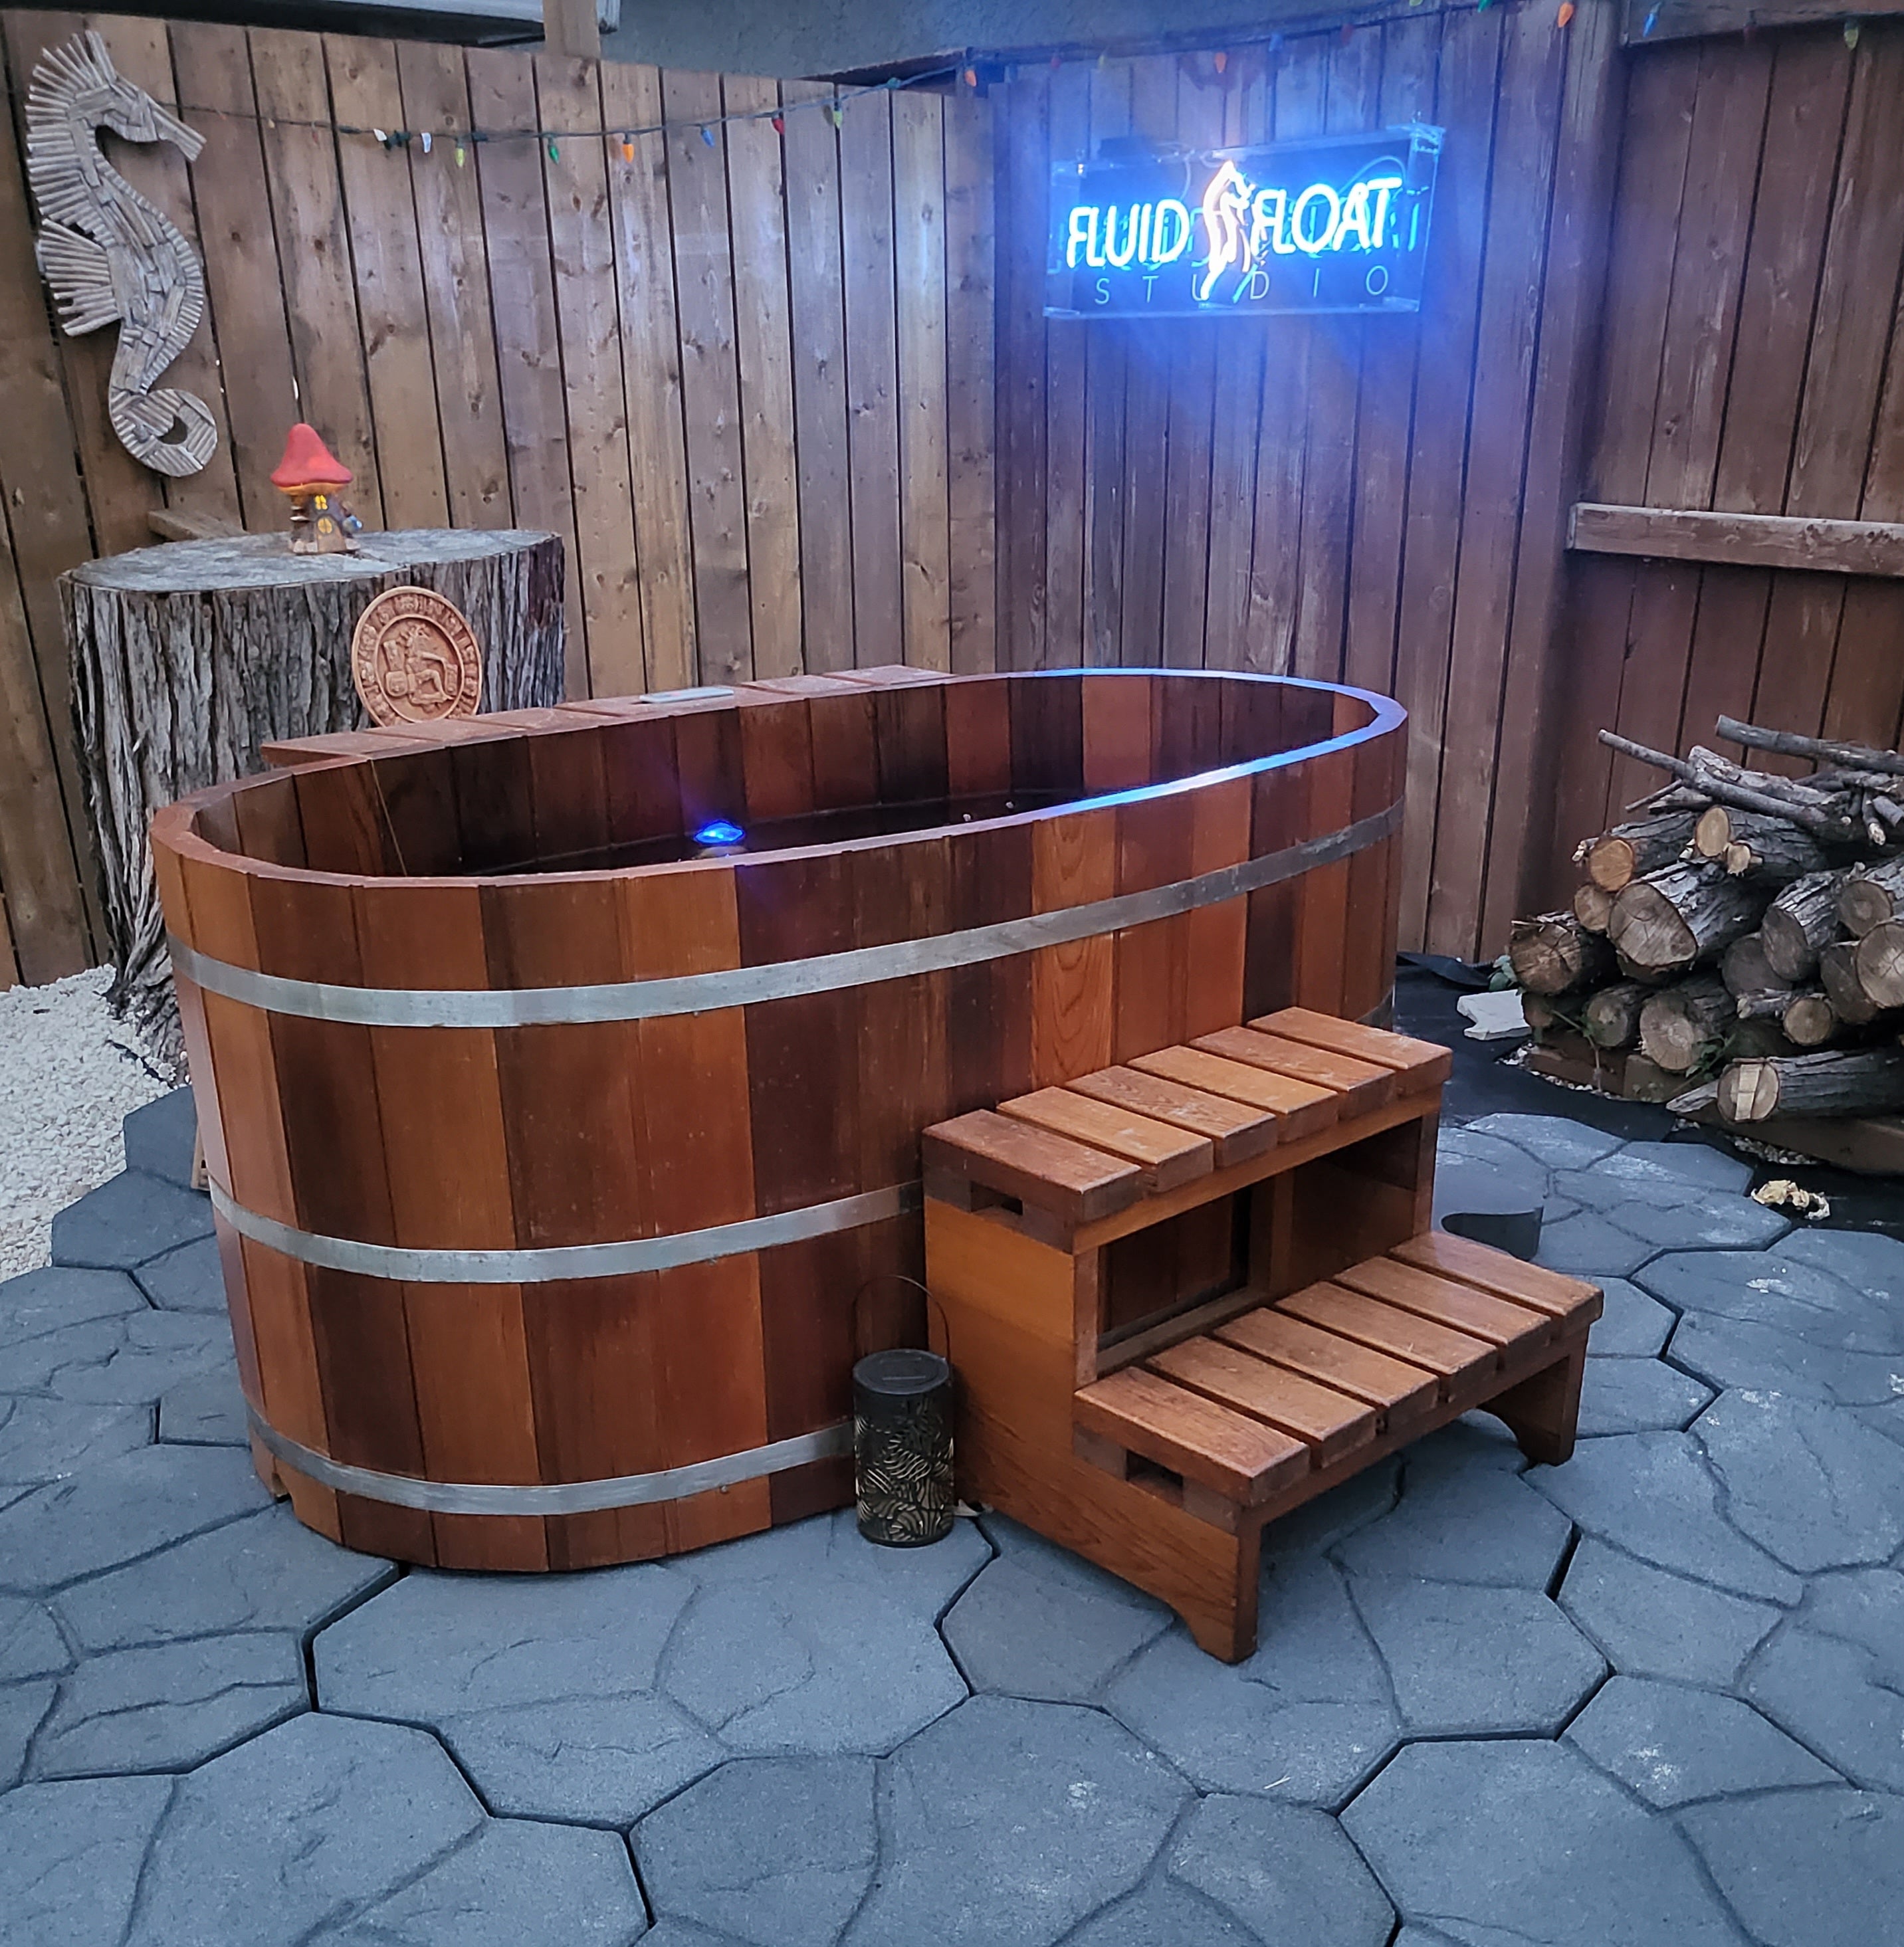 Cedar hot tub designed as a barrel!  Tinajas de madera, Bañera de madera,  Piscinas madera